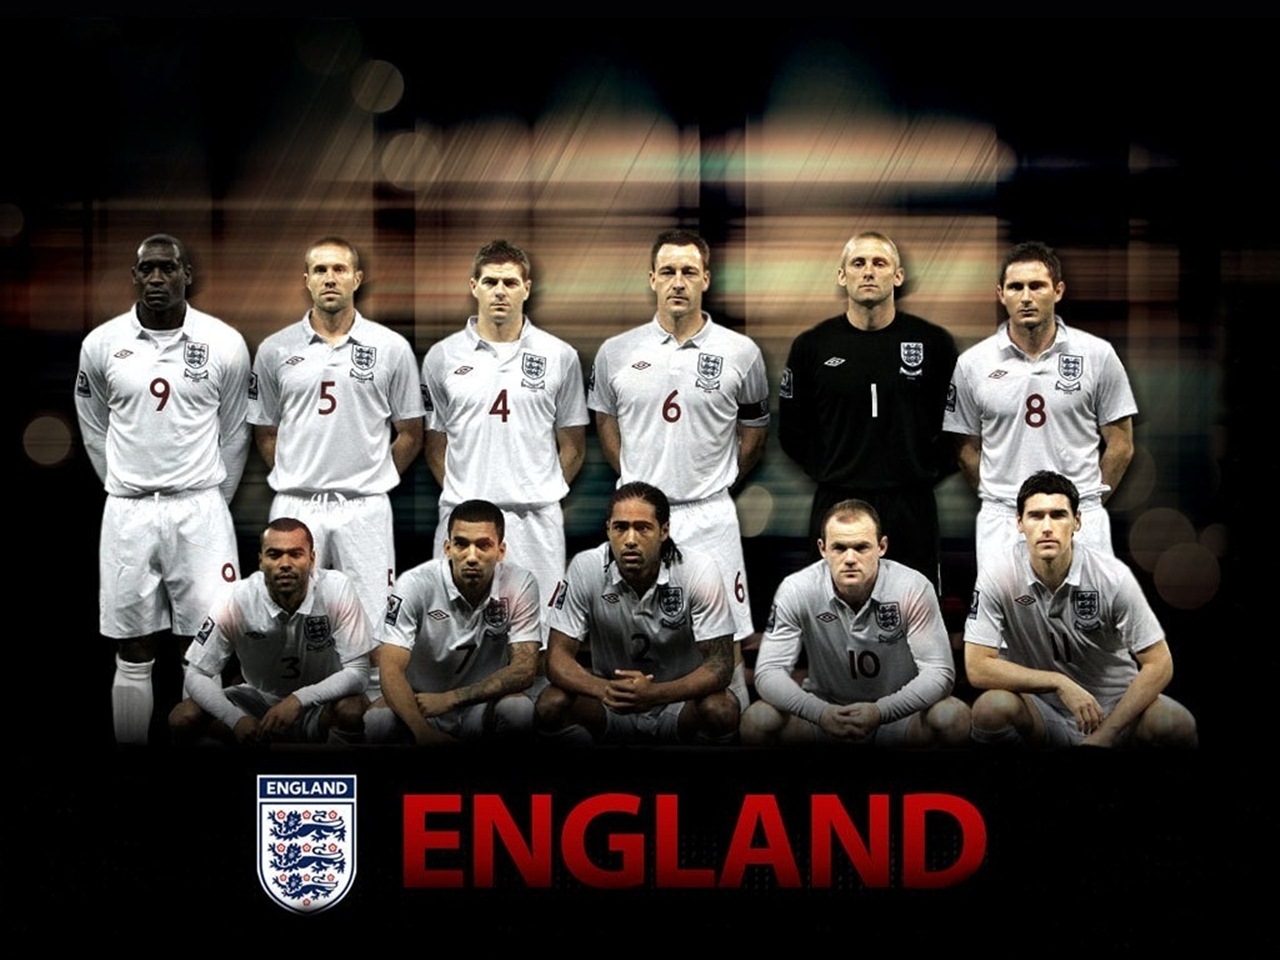 England Soccer Team Wallpaper HD Wallpapers Download Free Images Wallpaper [wallpaper981.blogspot.com]